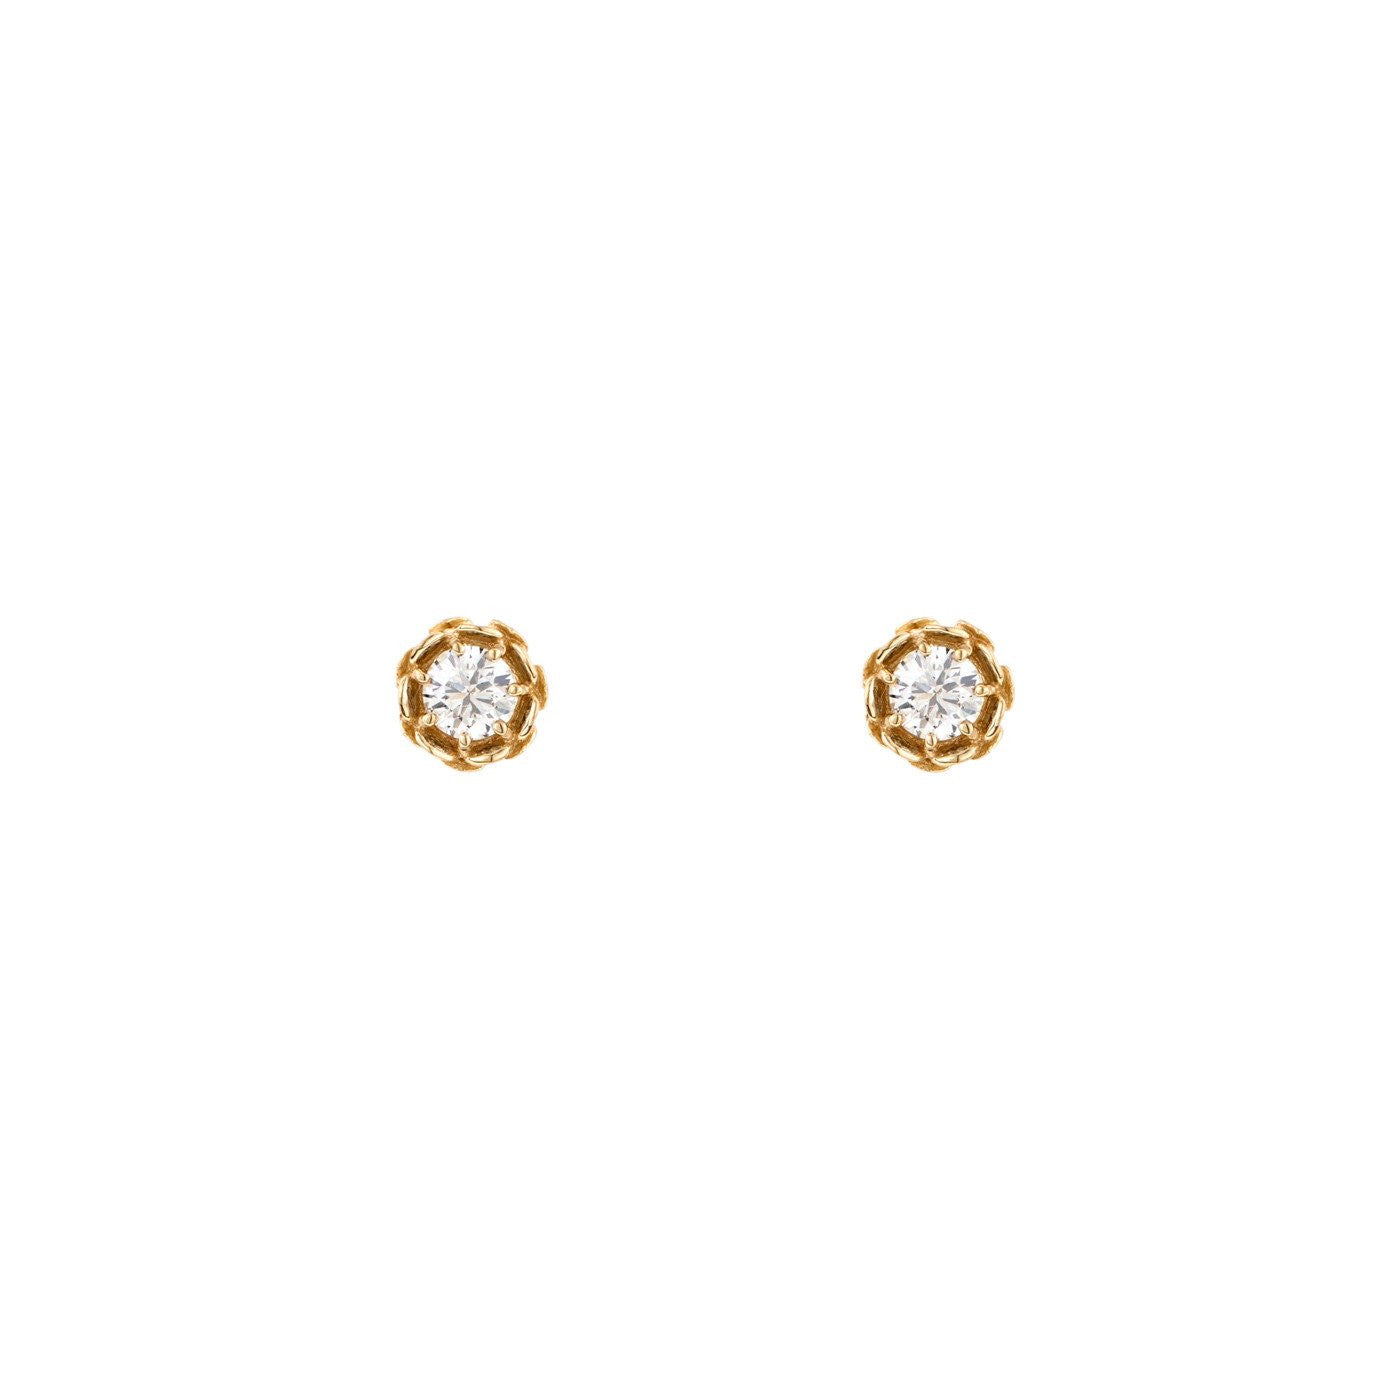 large diamond lotus flower earrings PRE 406 14KY_6fab4907 2183 49df a69f 03157dabb029